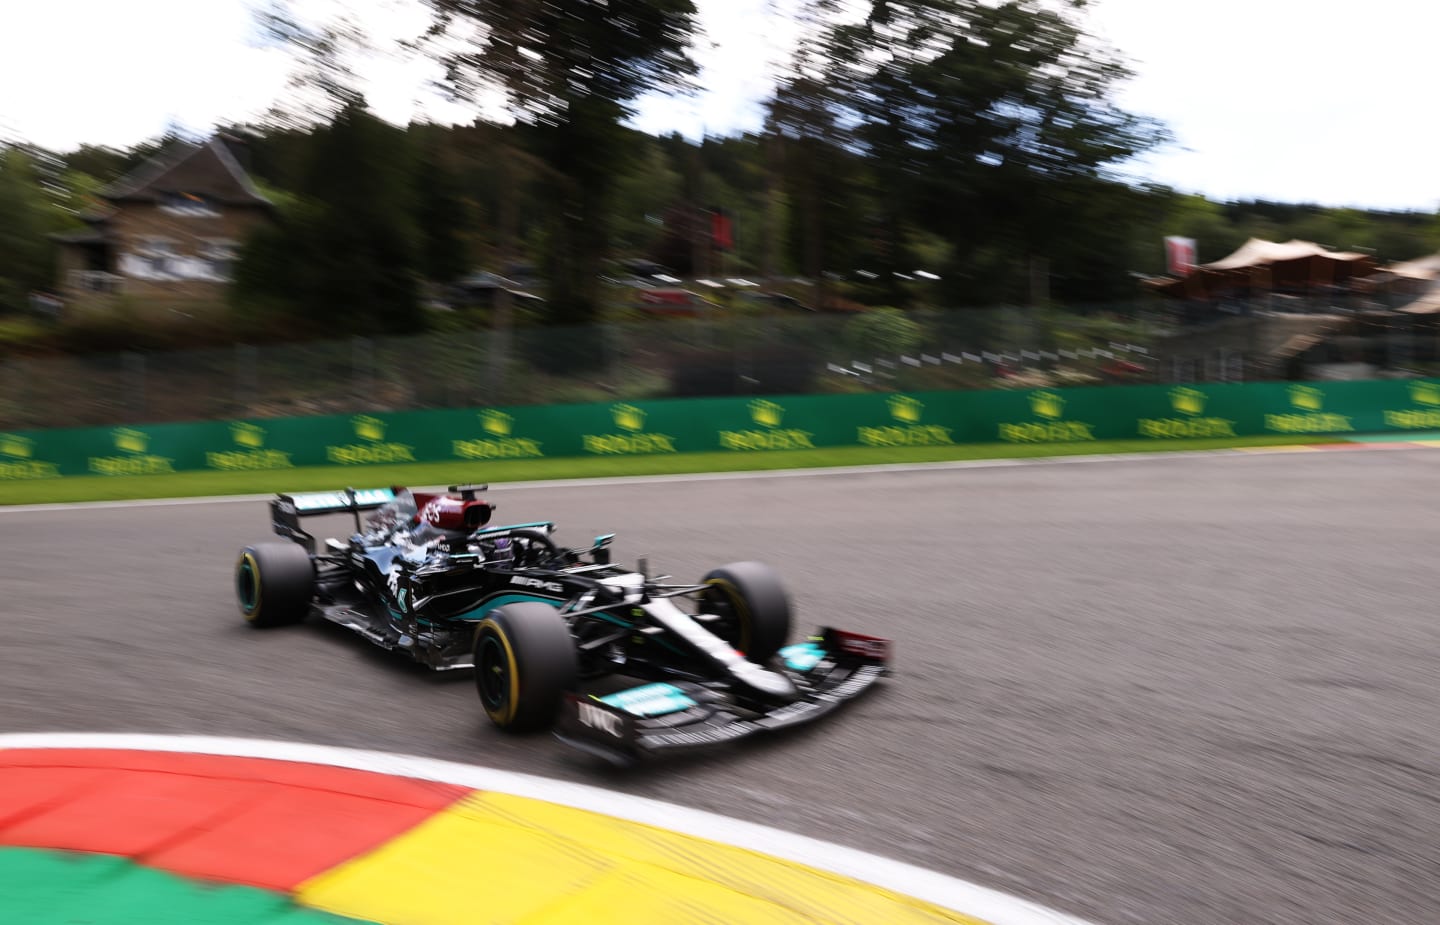 SPA, BELGIUM - AUGUST 27: Lewis Hamilton of Great Britain driving the (44) Mercedes AMG Petronas F1